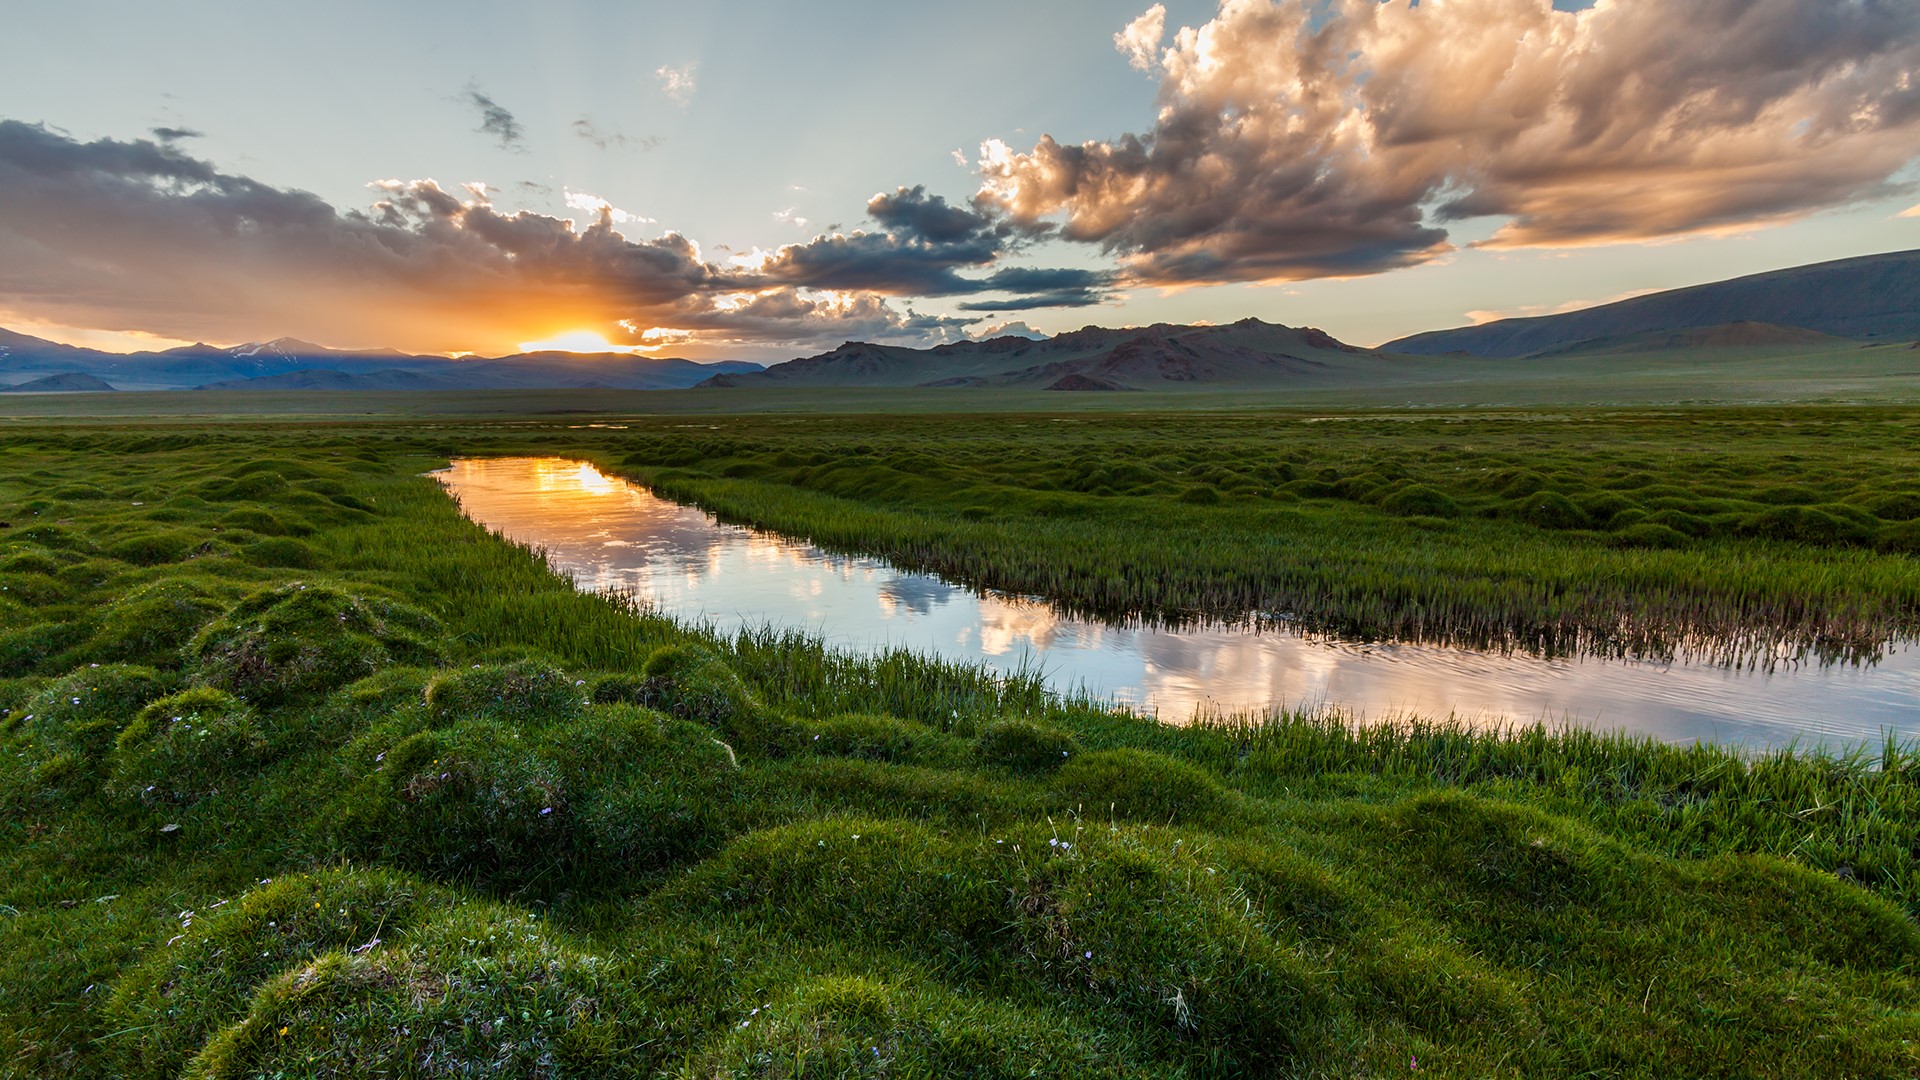 General 1920x1080 nature landscape plants moss clouds sky river mountains sunset field grass Iceland wetland